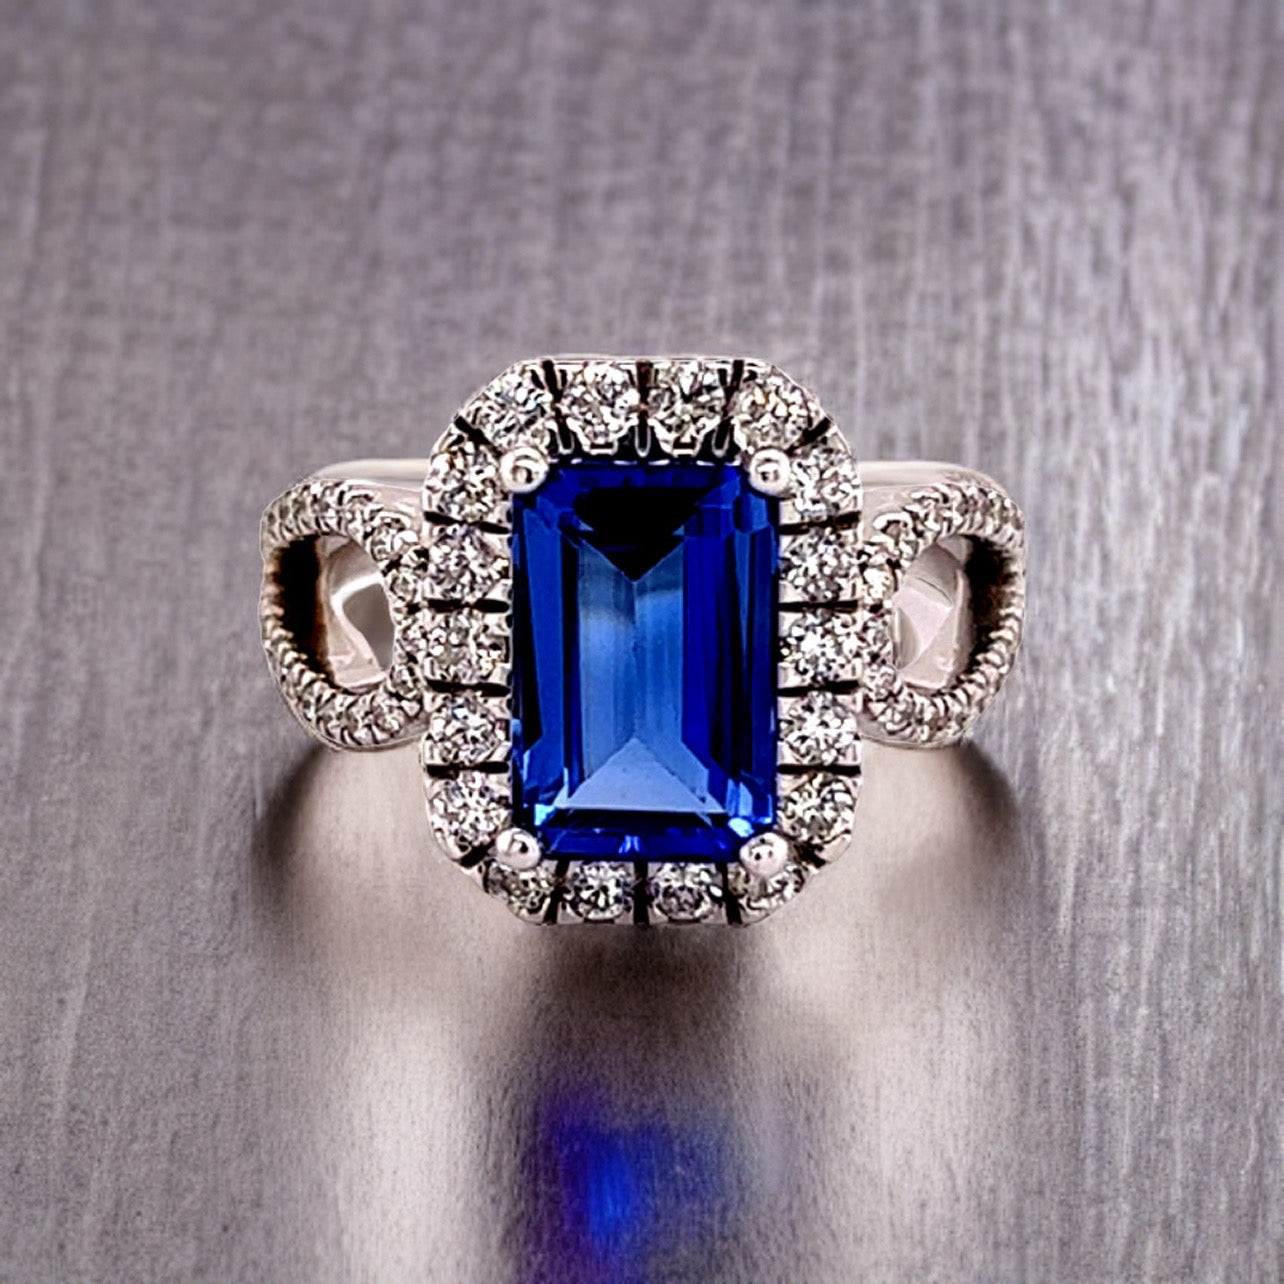 Natural Tanzanite Diamond Ring 14k Gold 5.08 TCW 5.52g Certified $5,950 215423 - Certified Fine Jewelry